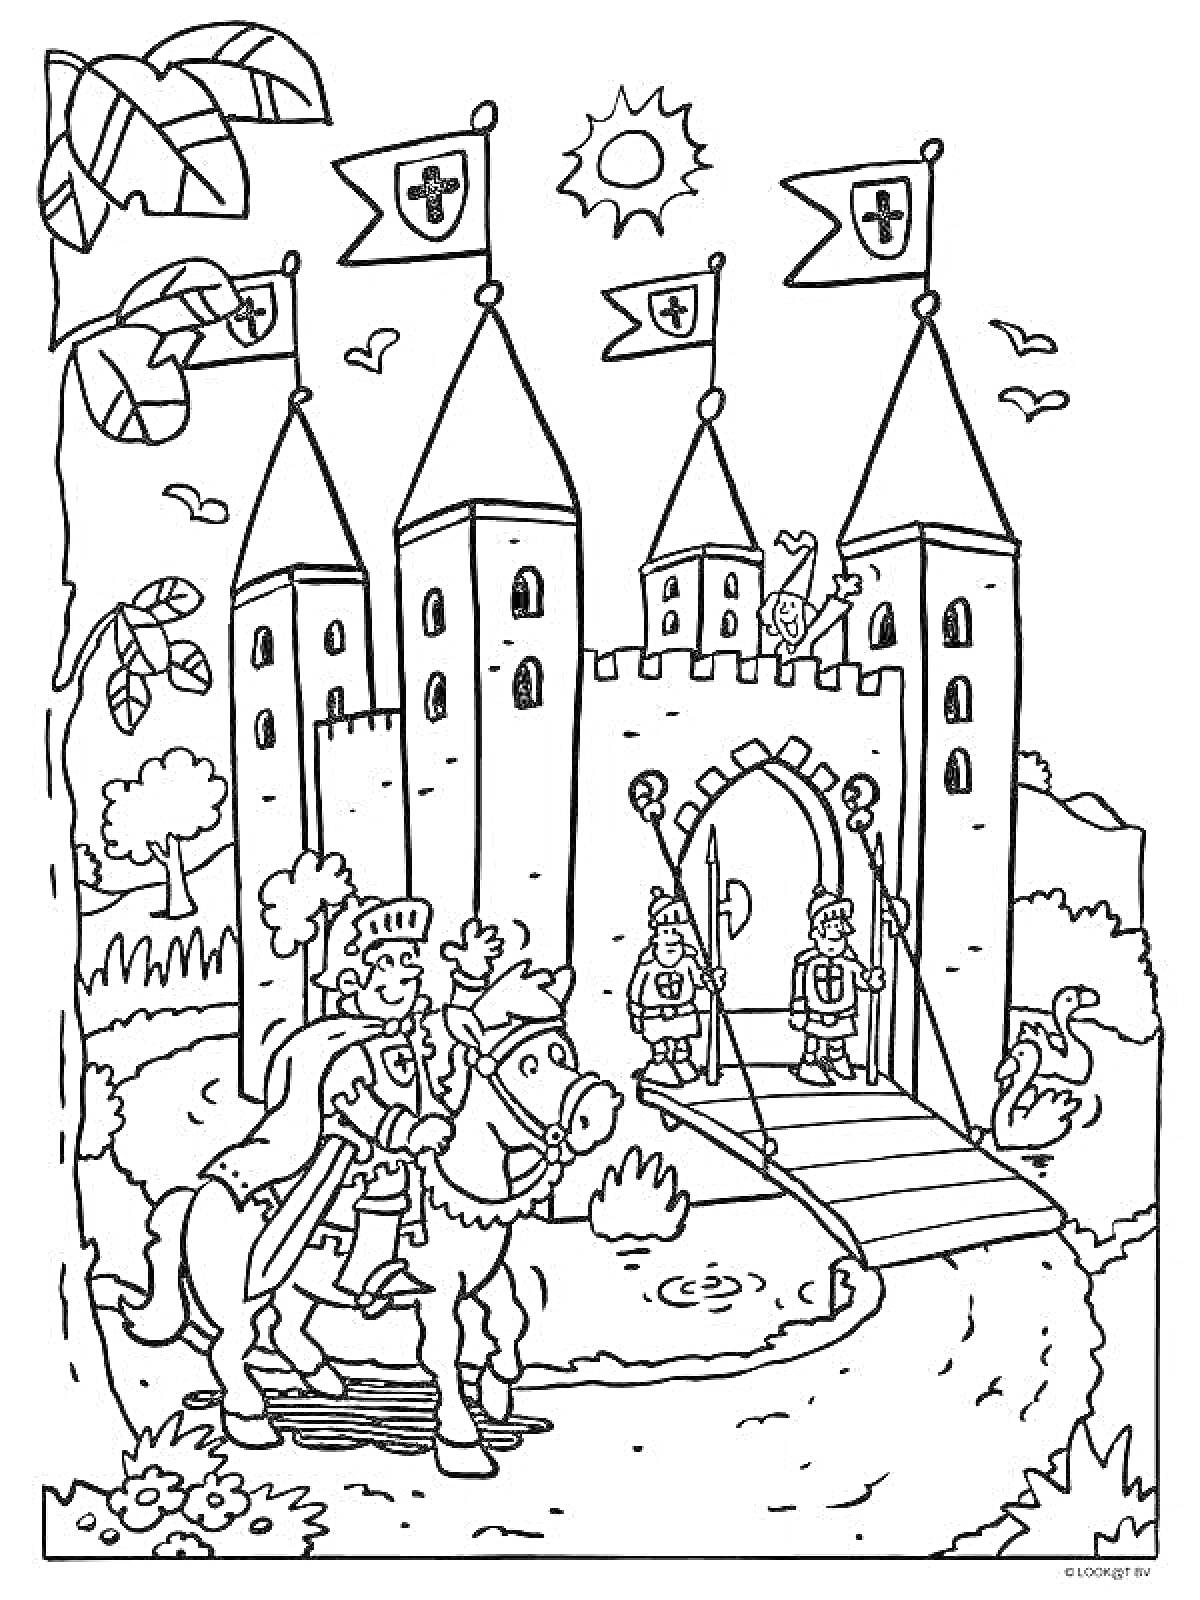 Рыцарский замок со знаменами и рыцарем на коне у подъёмного моста